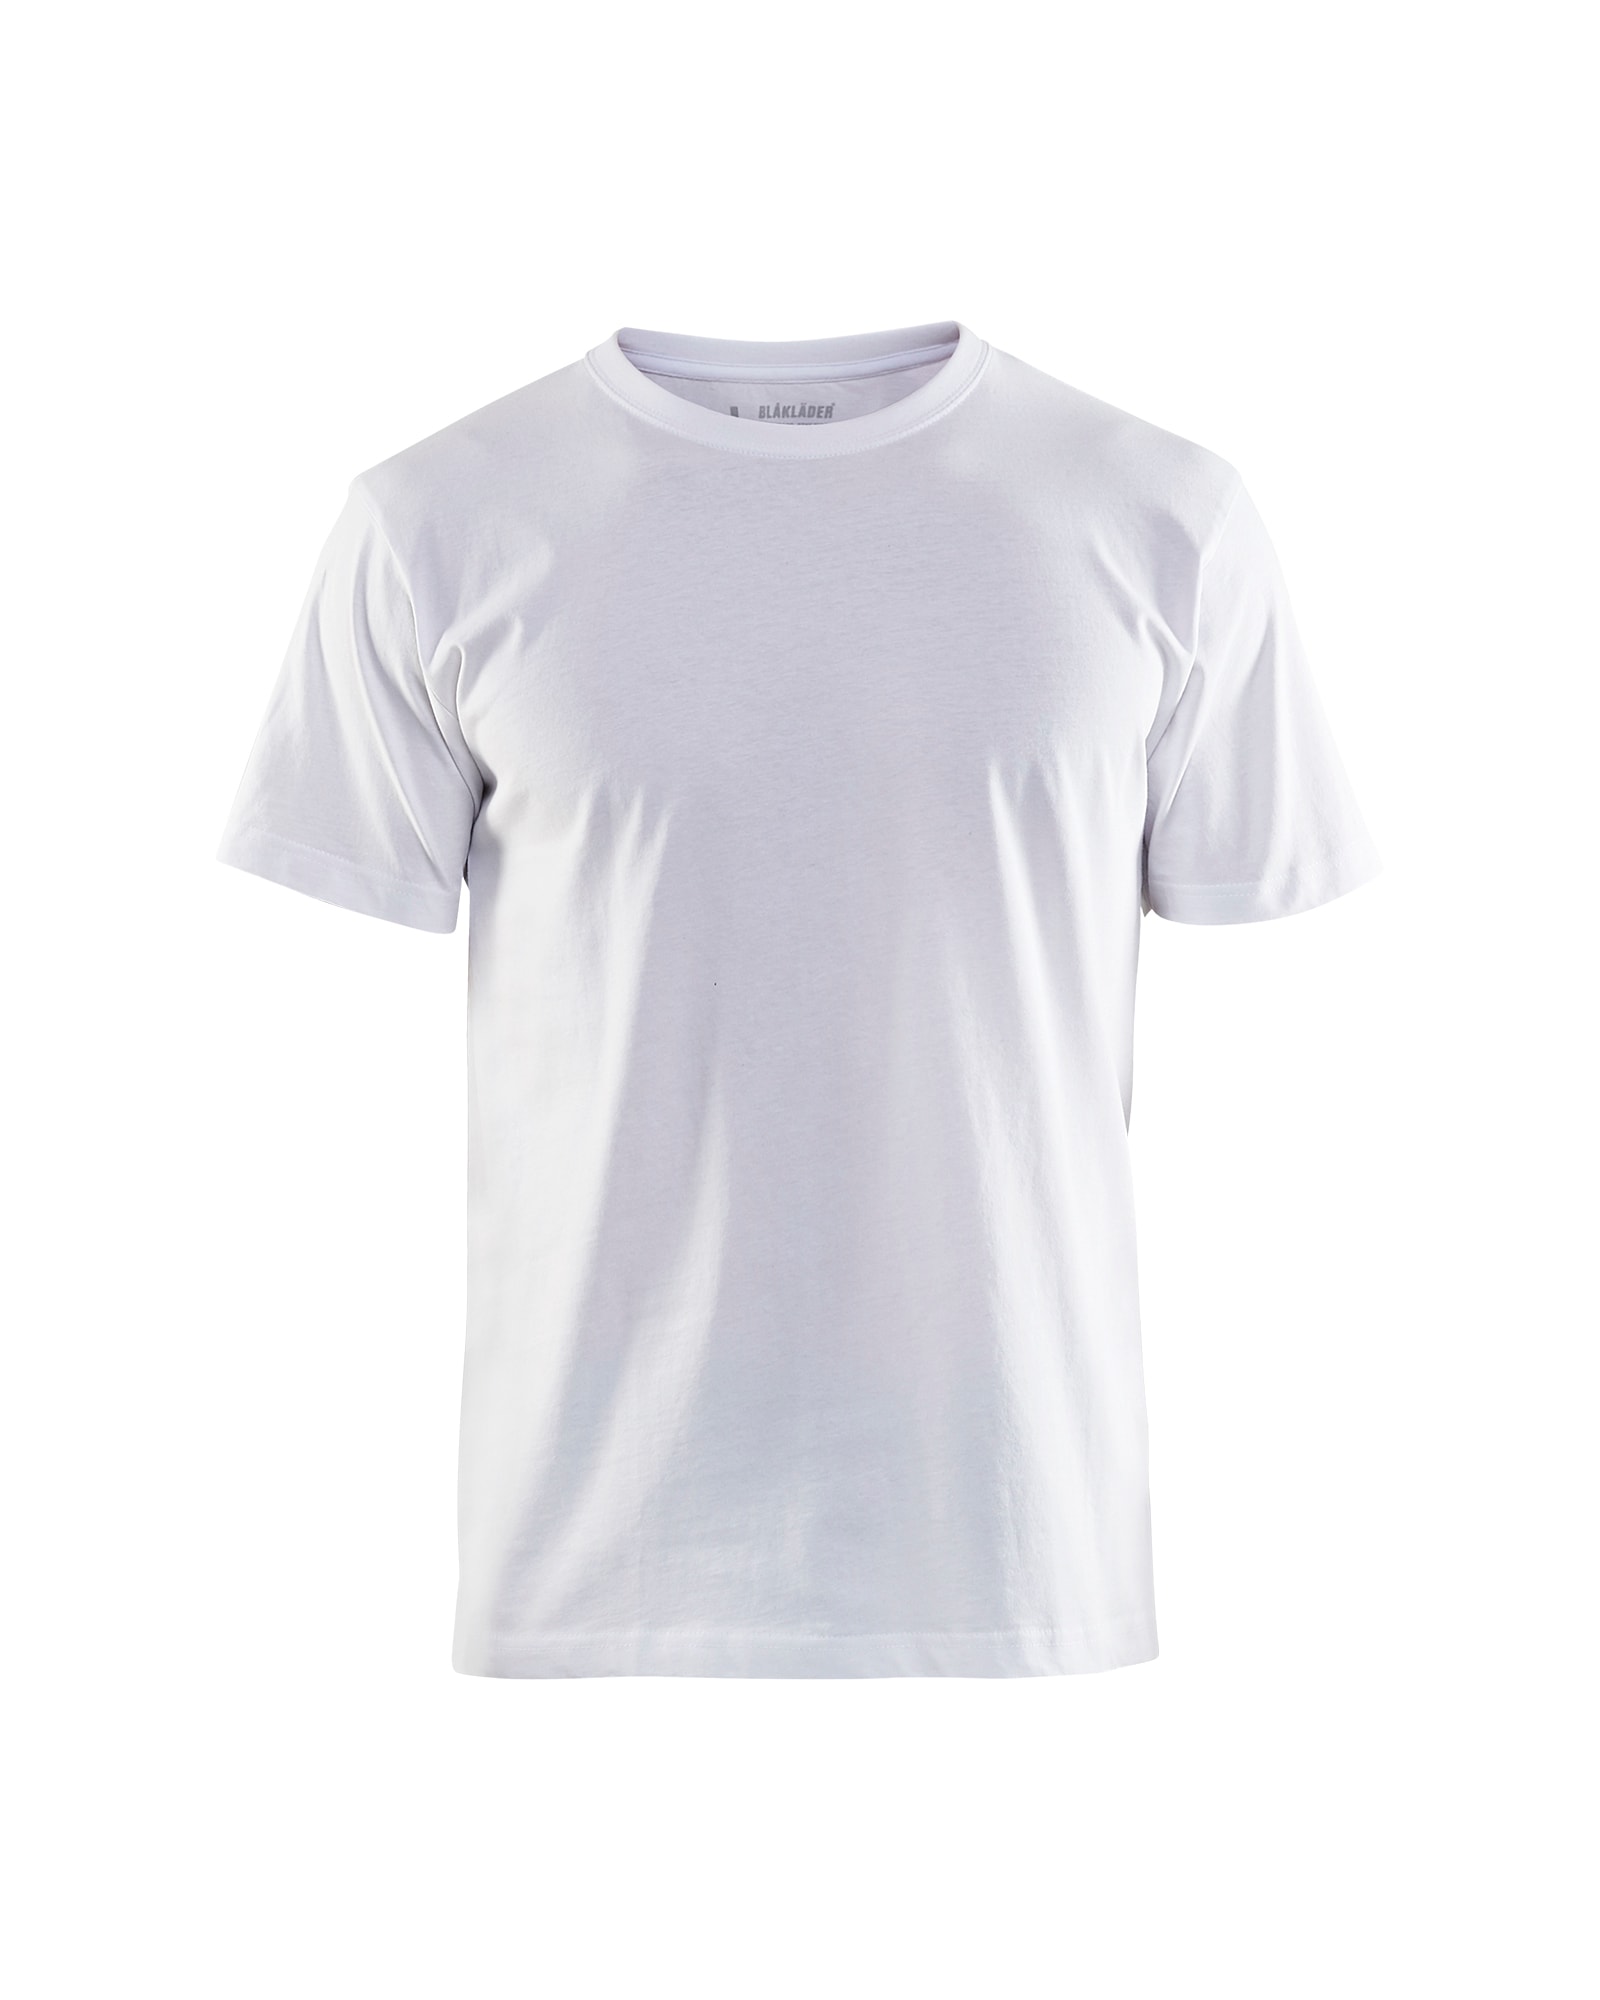 Blakläder Set Hosen T-Shirt 1500 1370 Handwerker (2 x Hose, 5 x T-Shirt, 1 x Gratis Gürtel, 1 x Gratis Kniepolster)